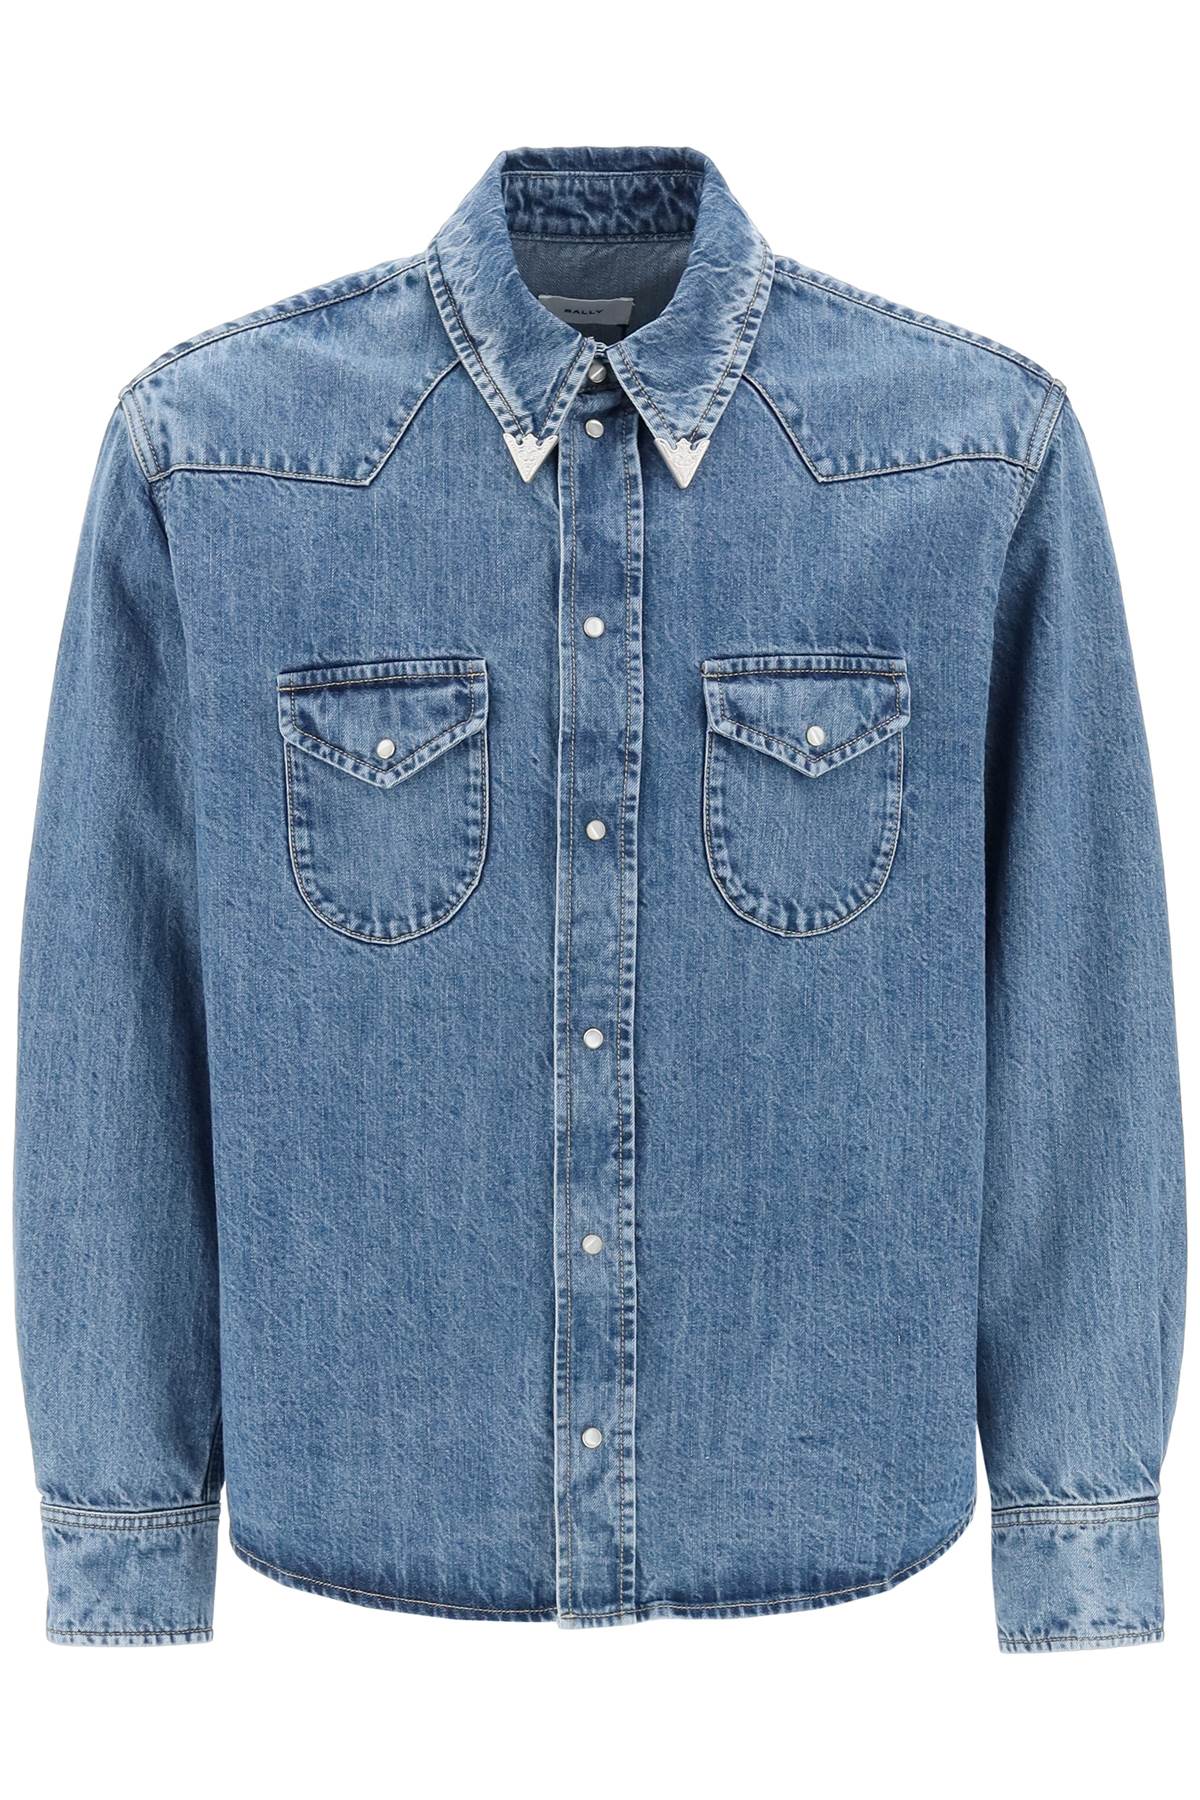 Men's Denim Western Shirt in Light Blue - FW23 Collection